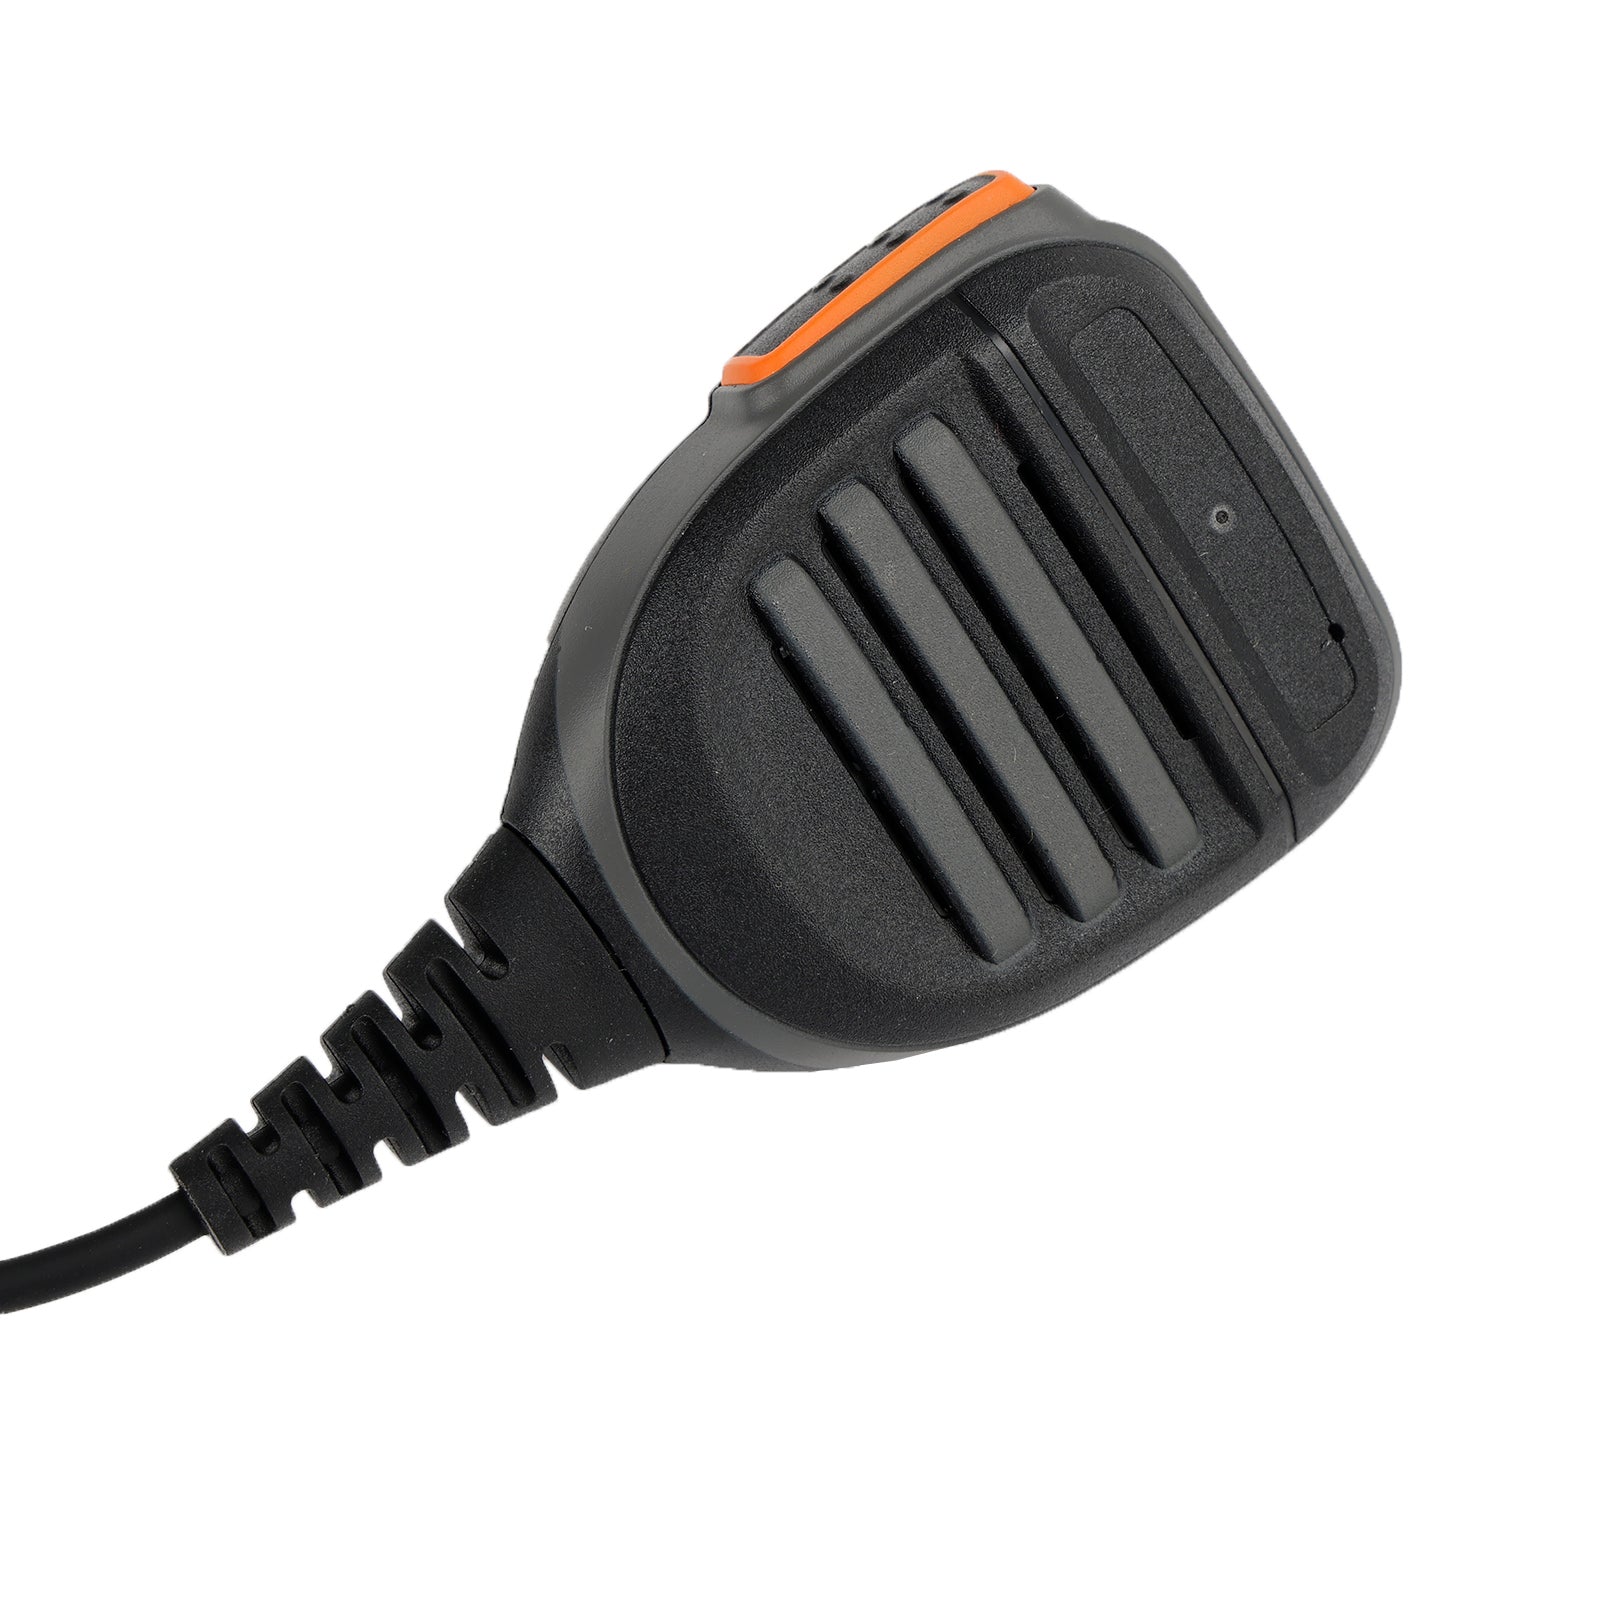 Spkeaker de microphone à main AP510-SM10, compatible avec la radio Hytera AP510 AP580 BP560 BP510